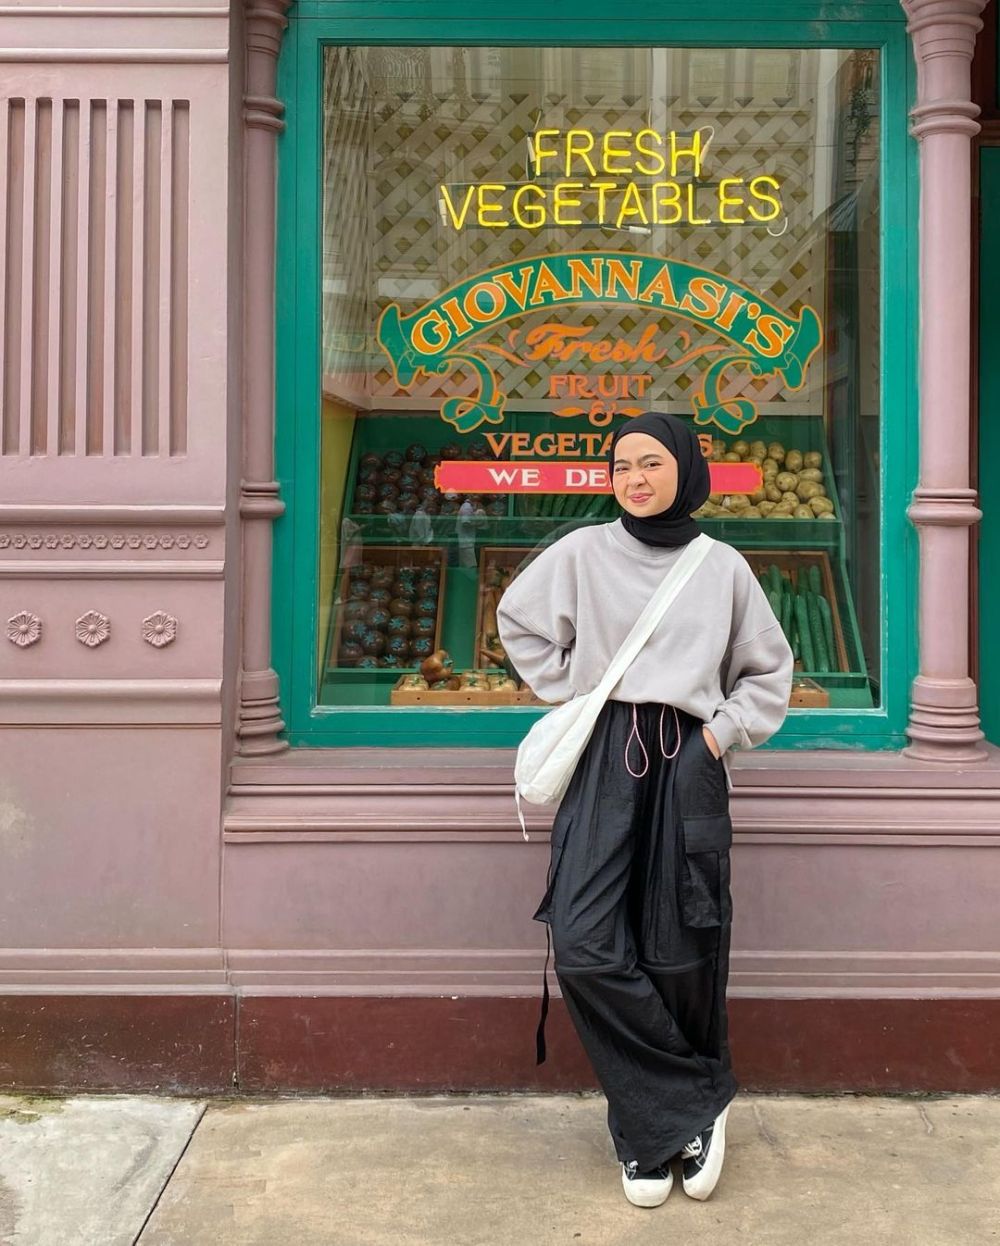 10 Ide Outfit Hijab Sweater ala Maryam Nurul, Simple tapi Kece